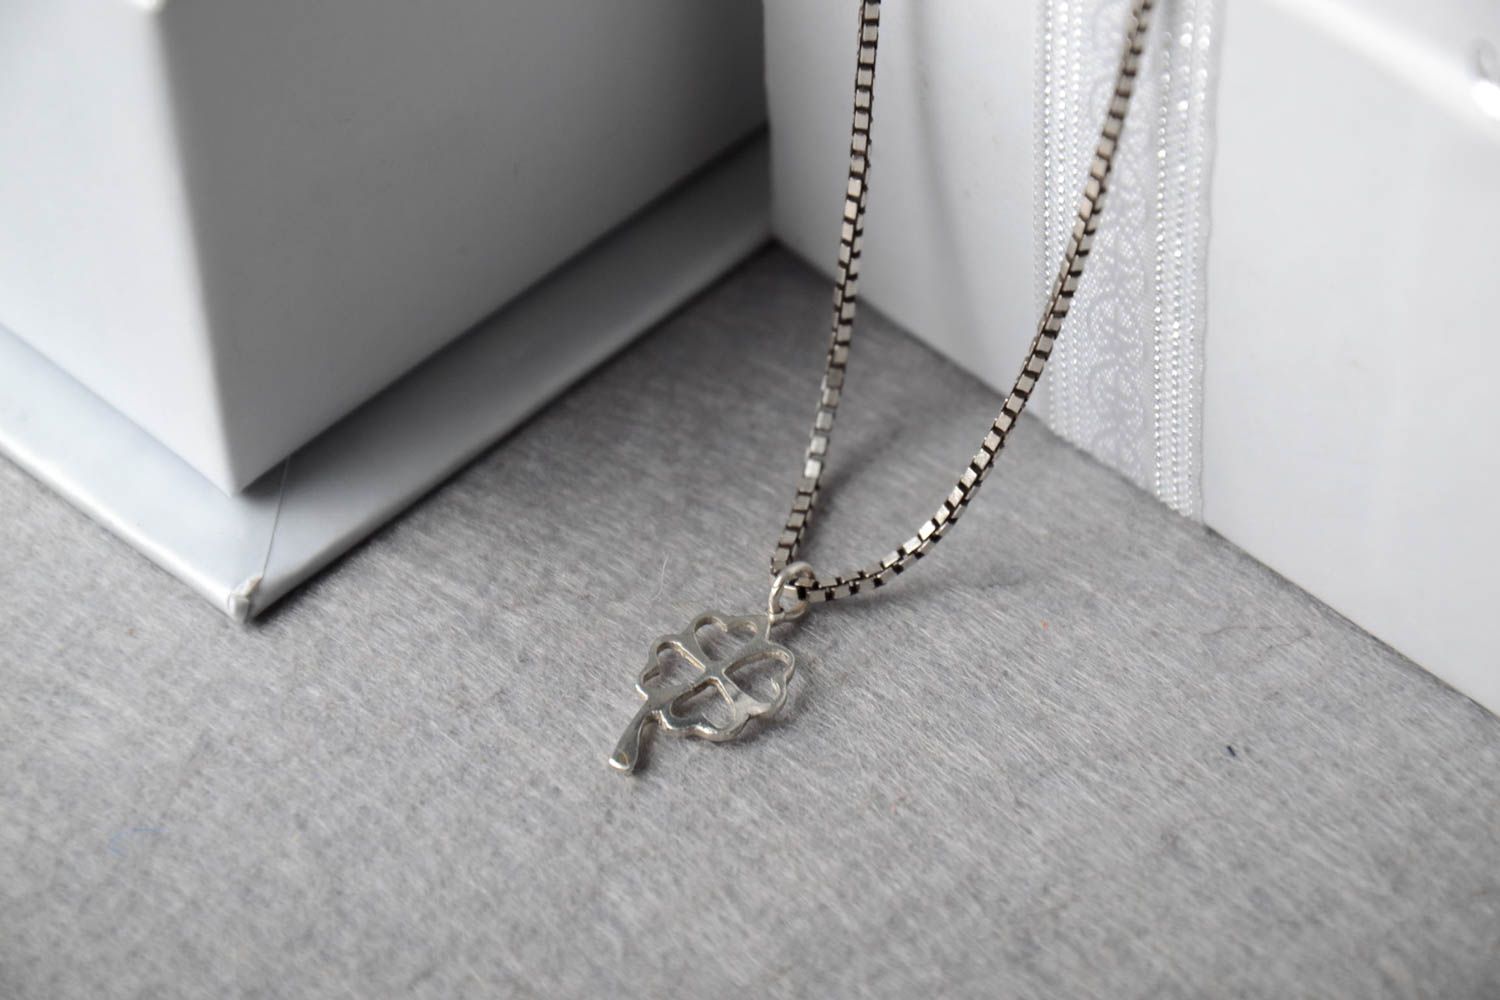 Handmade pendant designer accessory gift ideas silver jewelry silver pendant photo 1